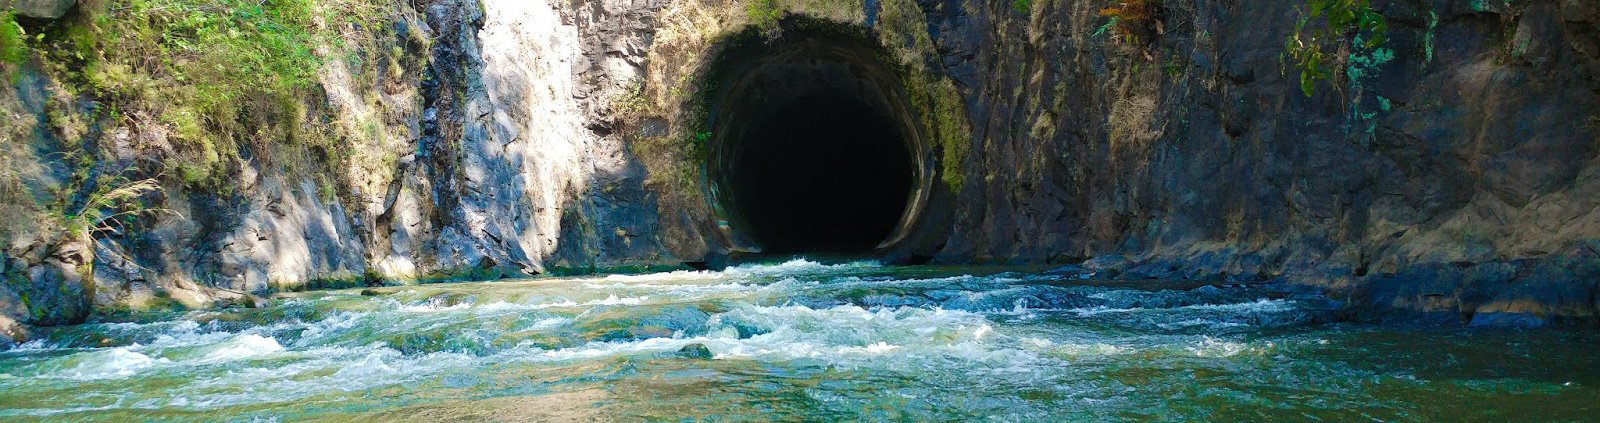 The Magical tunnel of Anchuruli